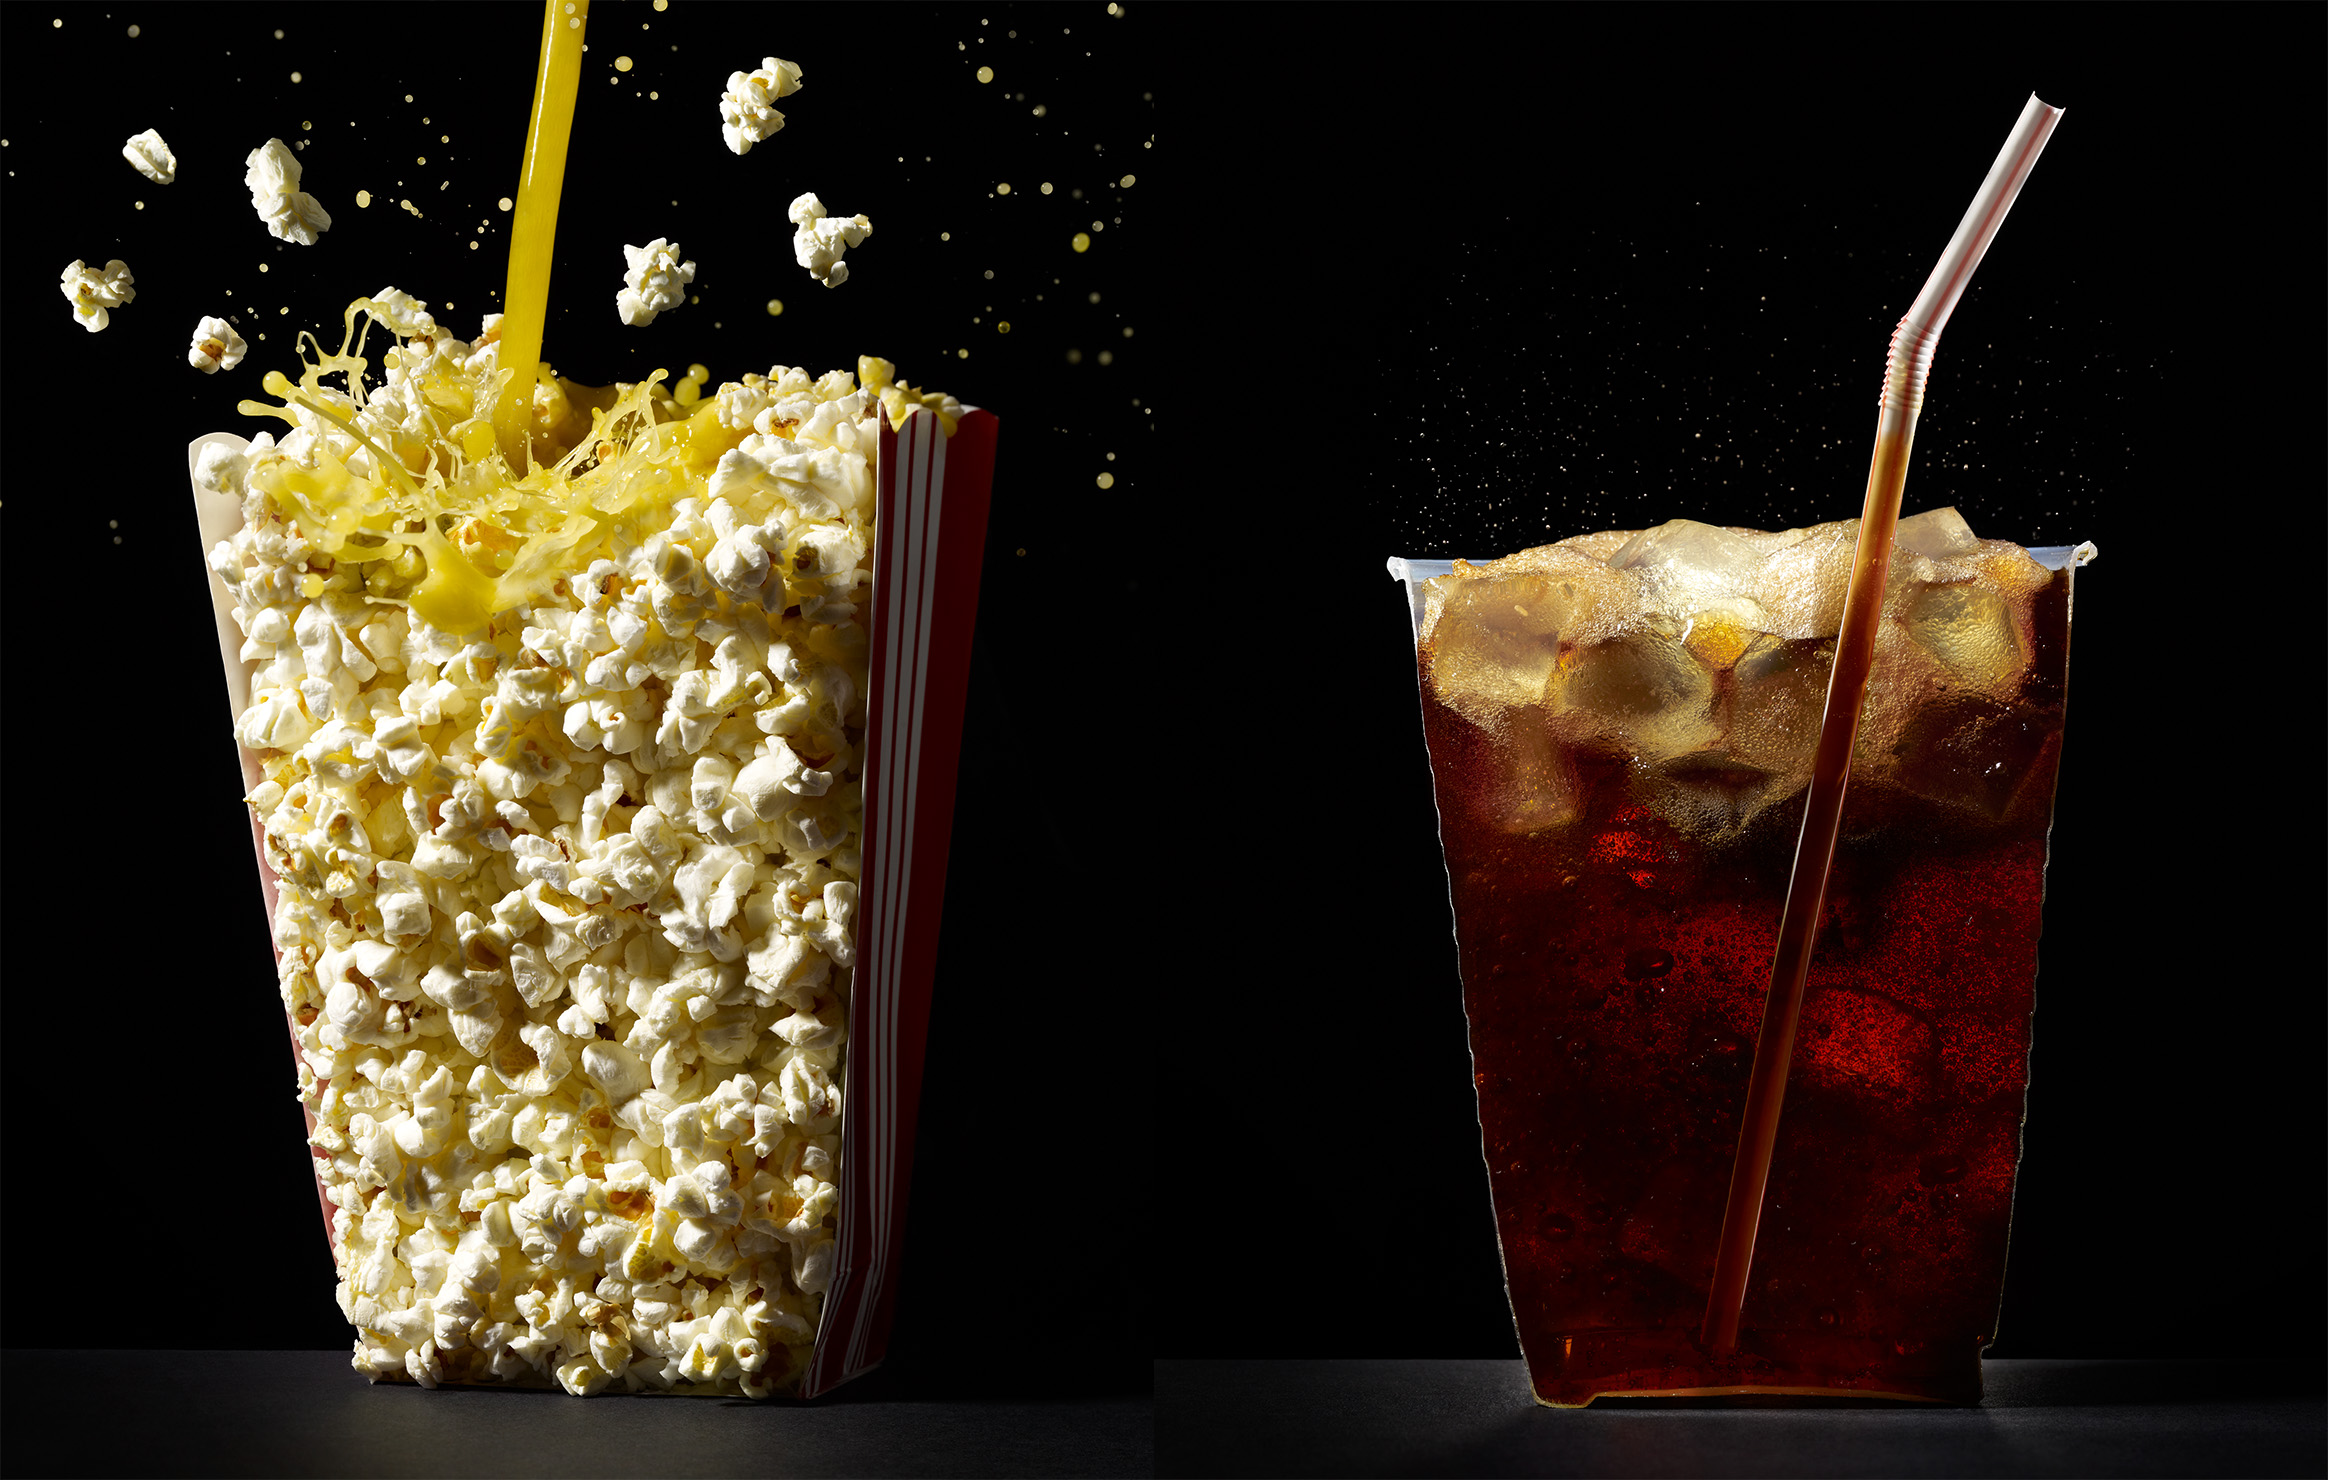 Popcorn and soda